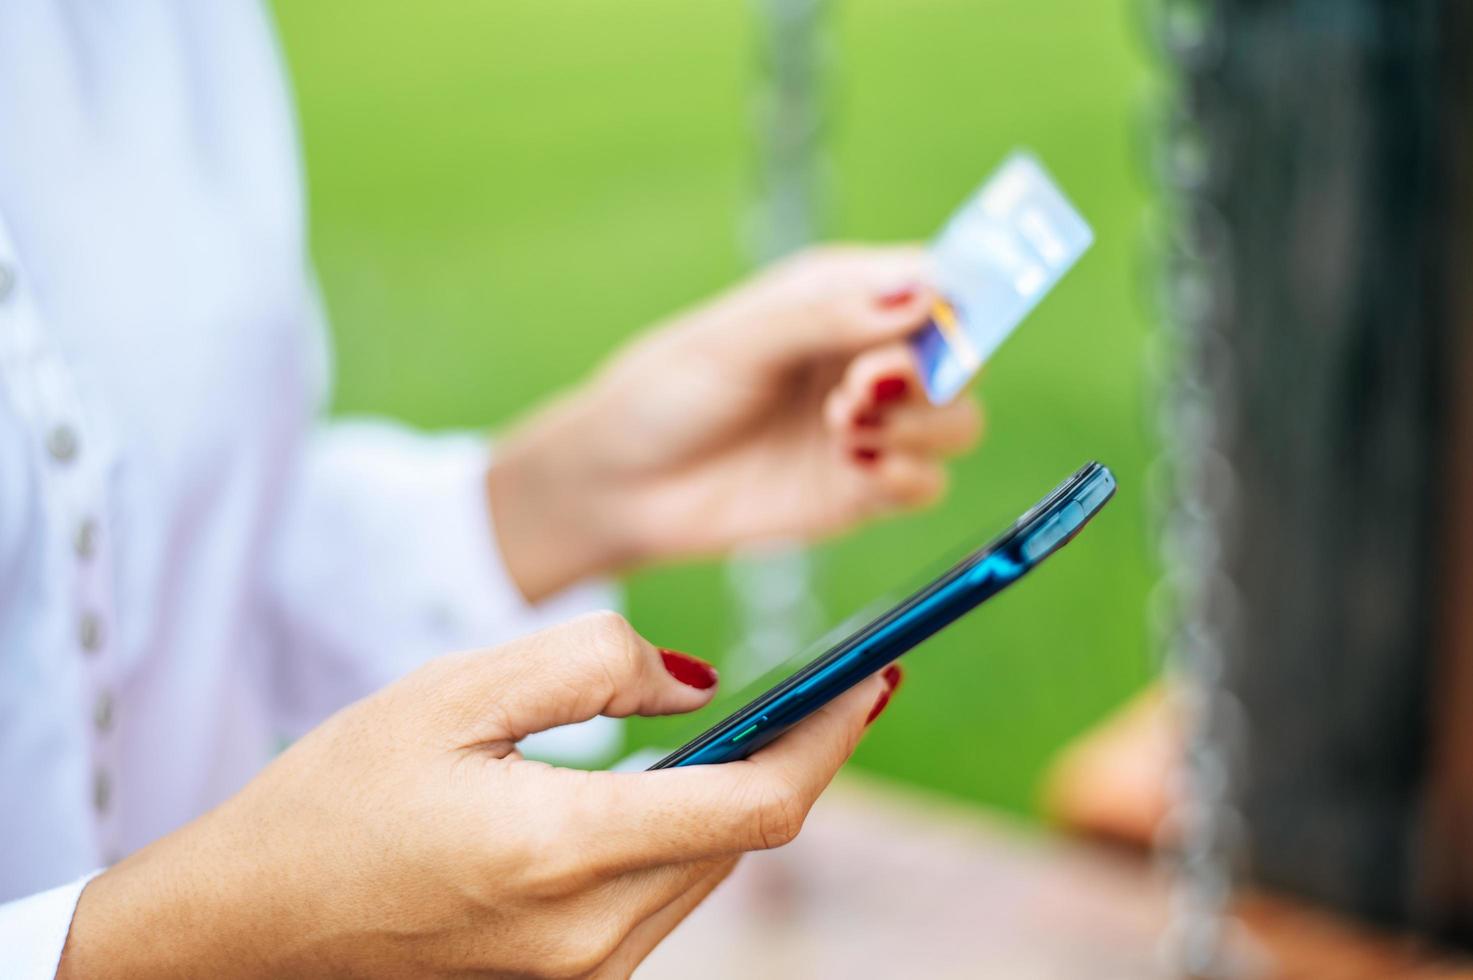 Zahlung für Waren per Kreditkarte per Smartphone foto